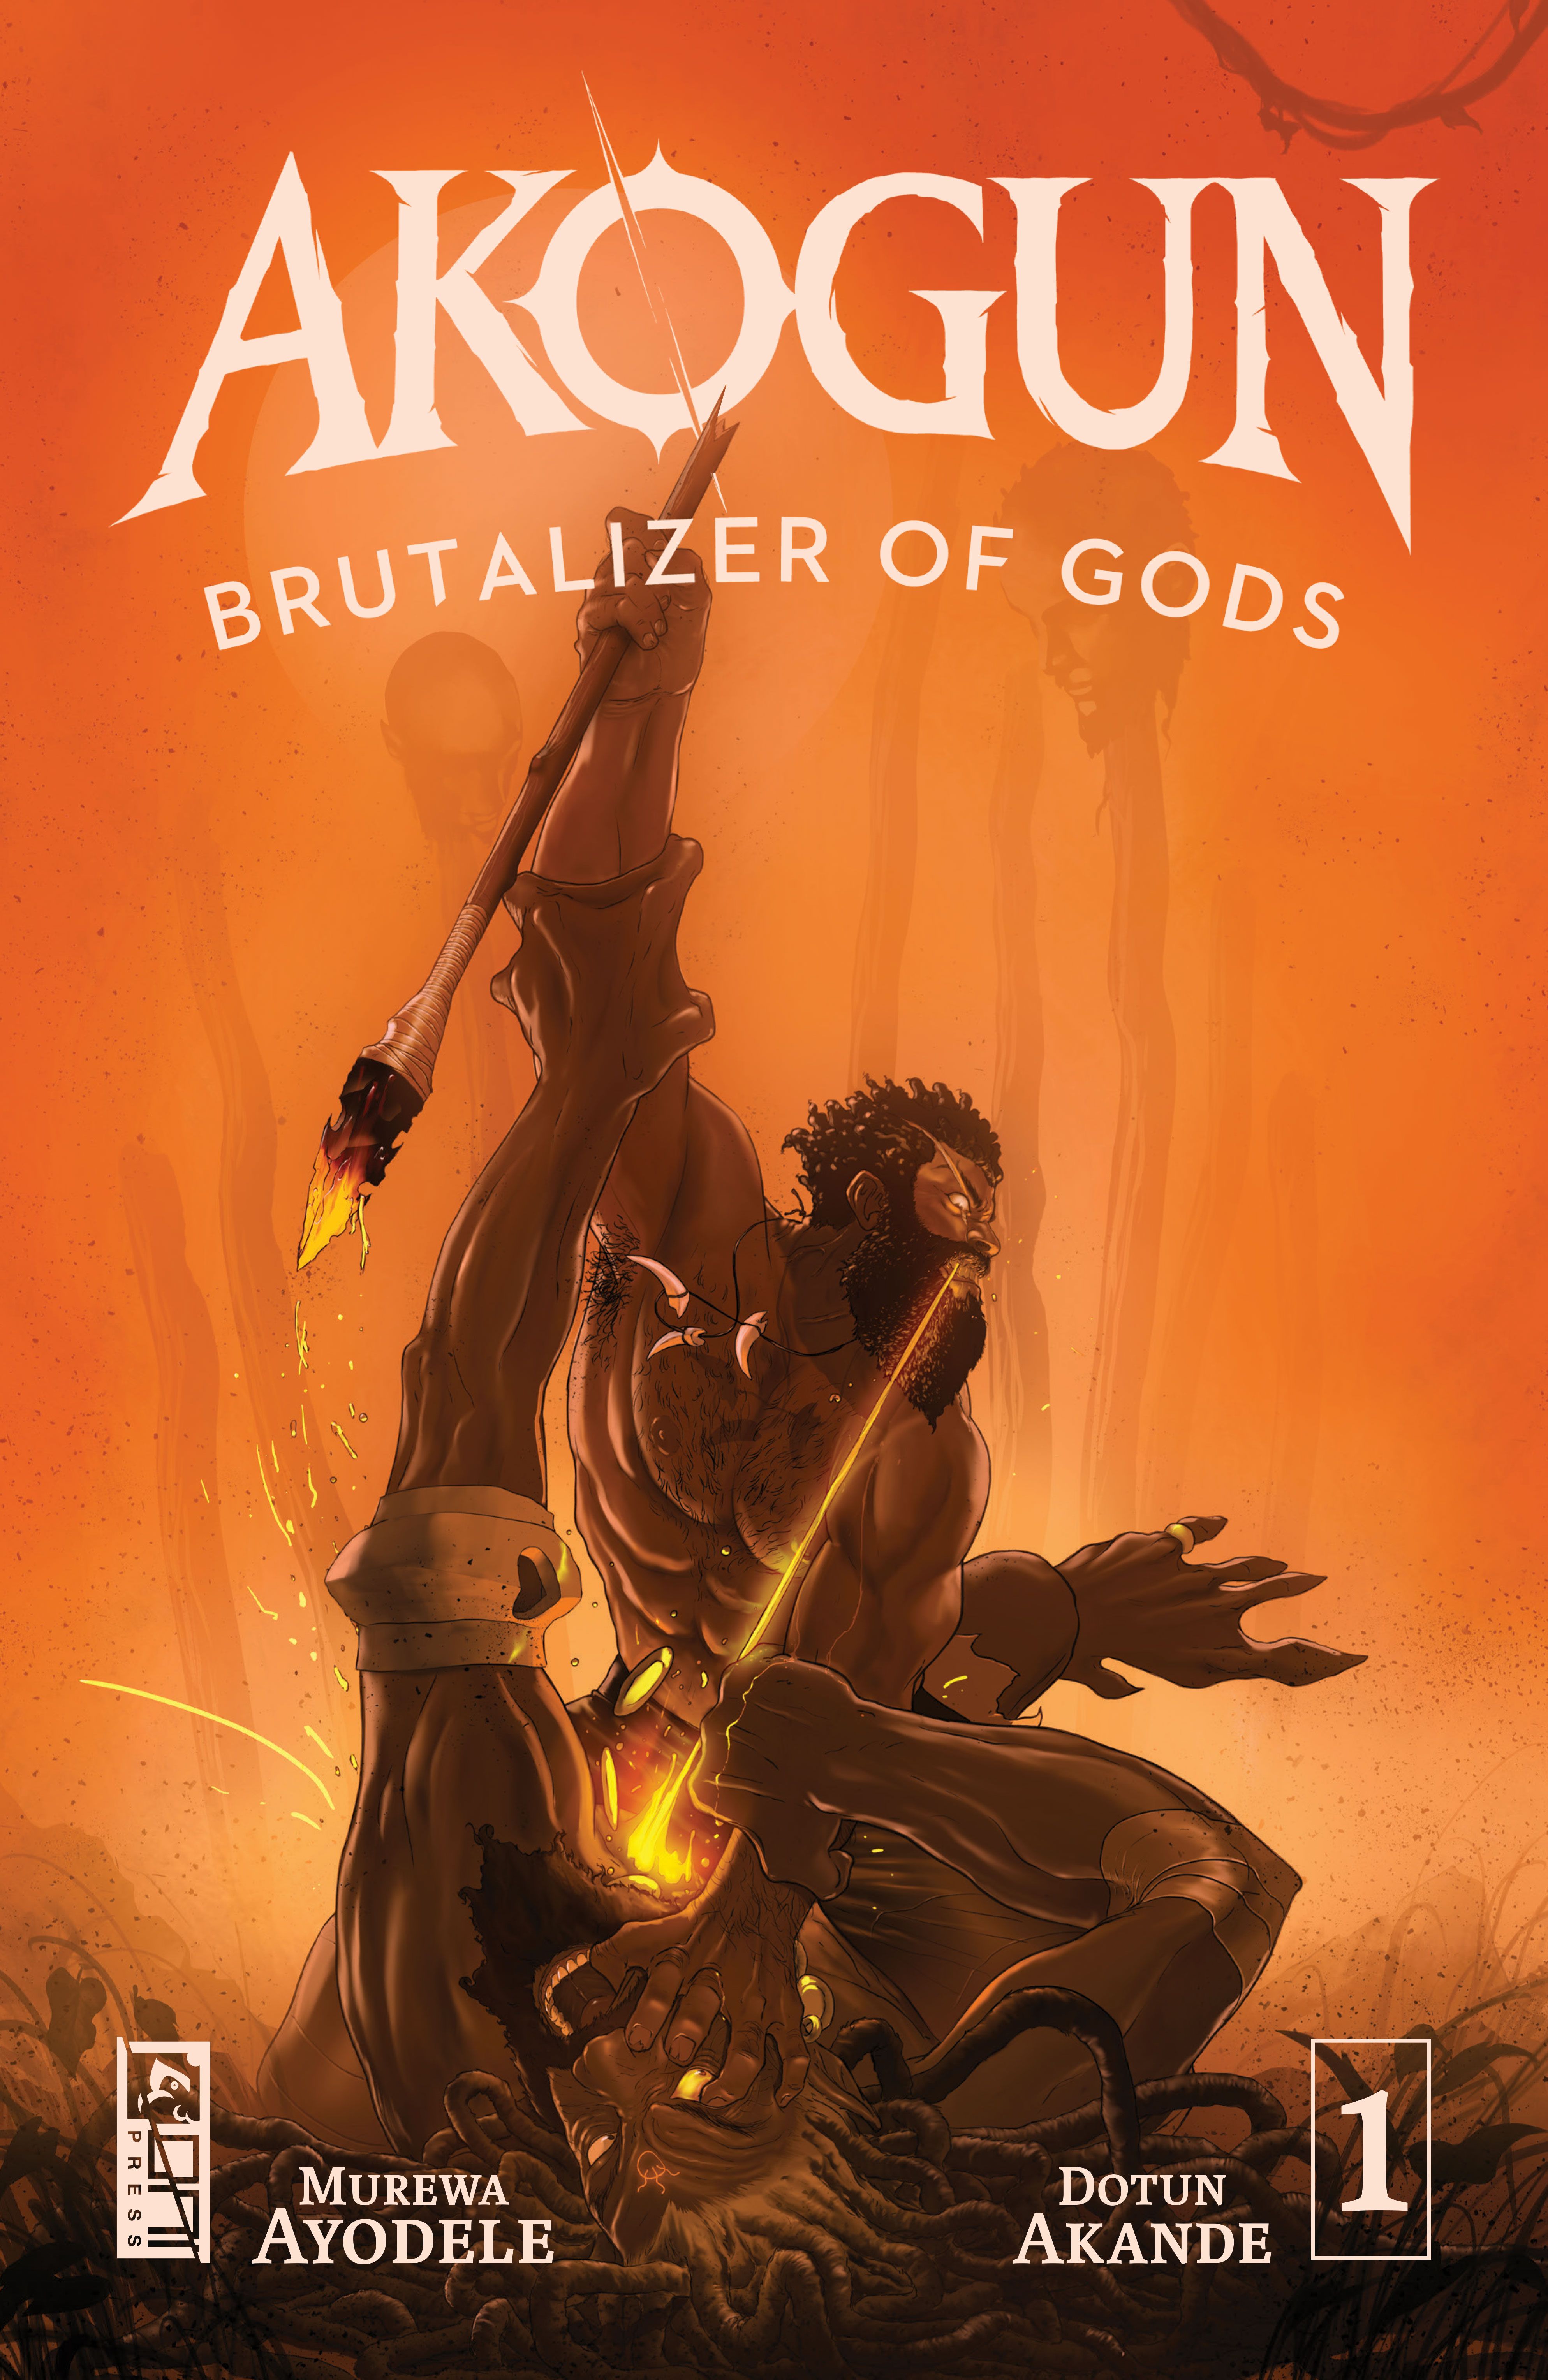 Akogun Brutalizer Of Gods #1 Comic